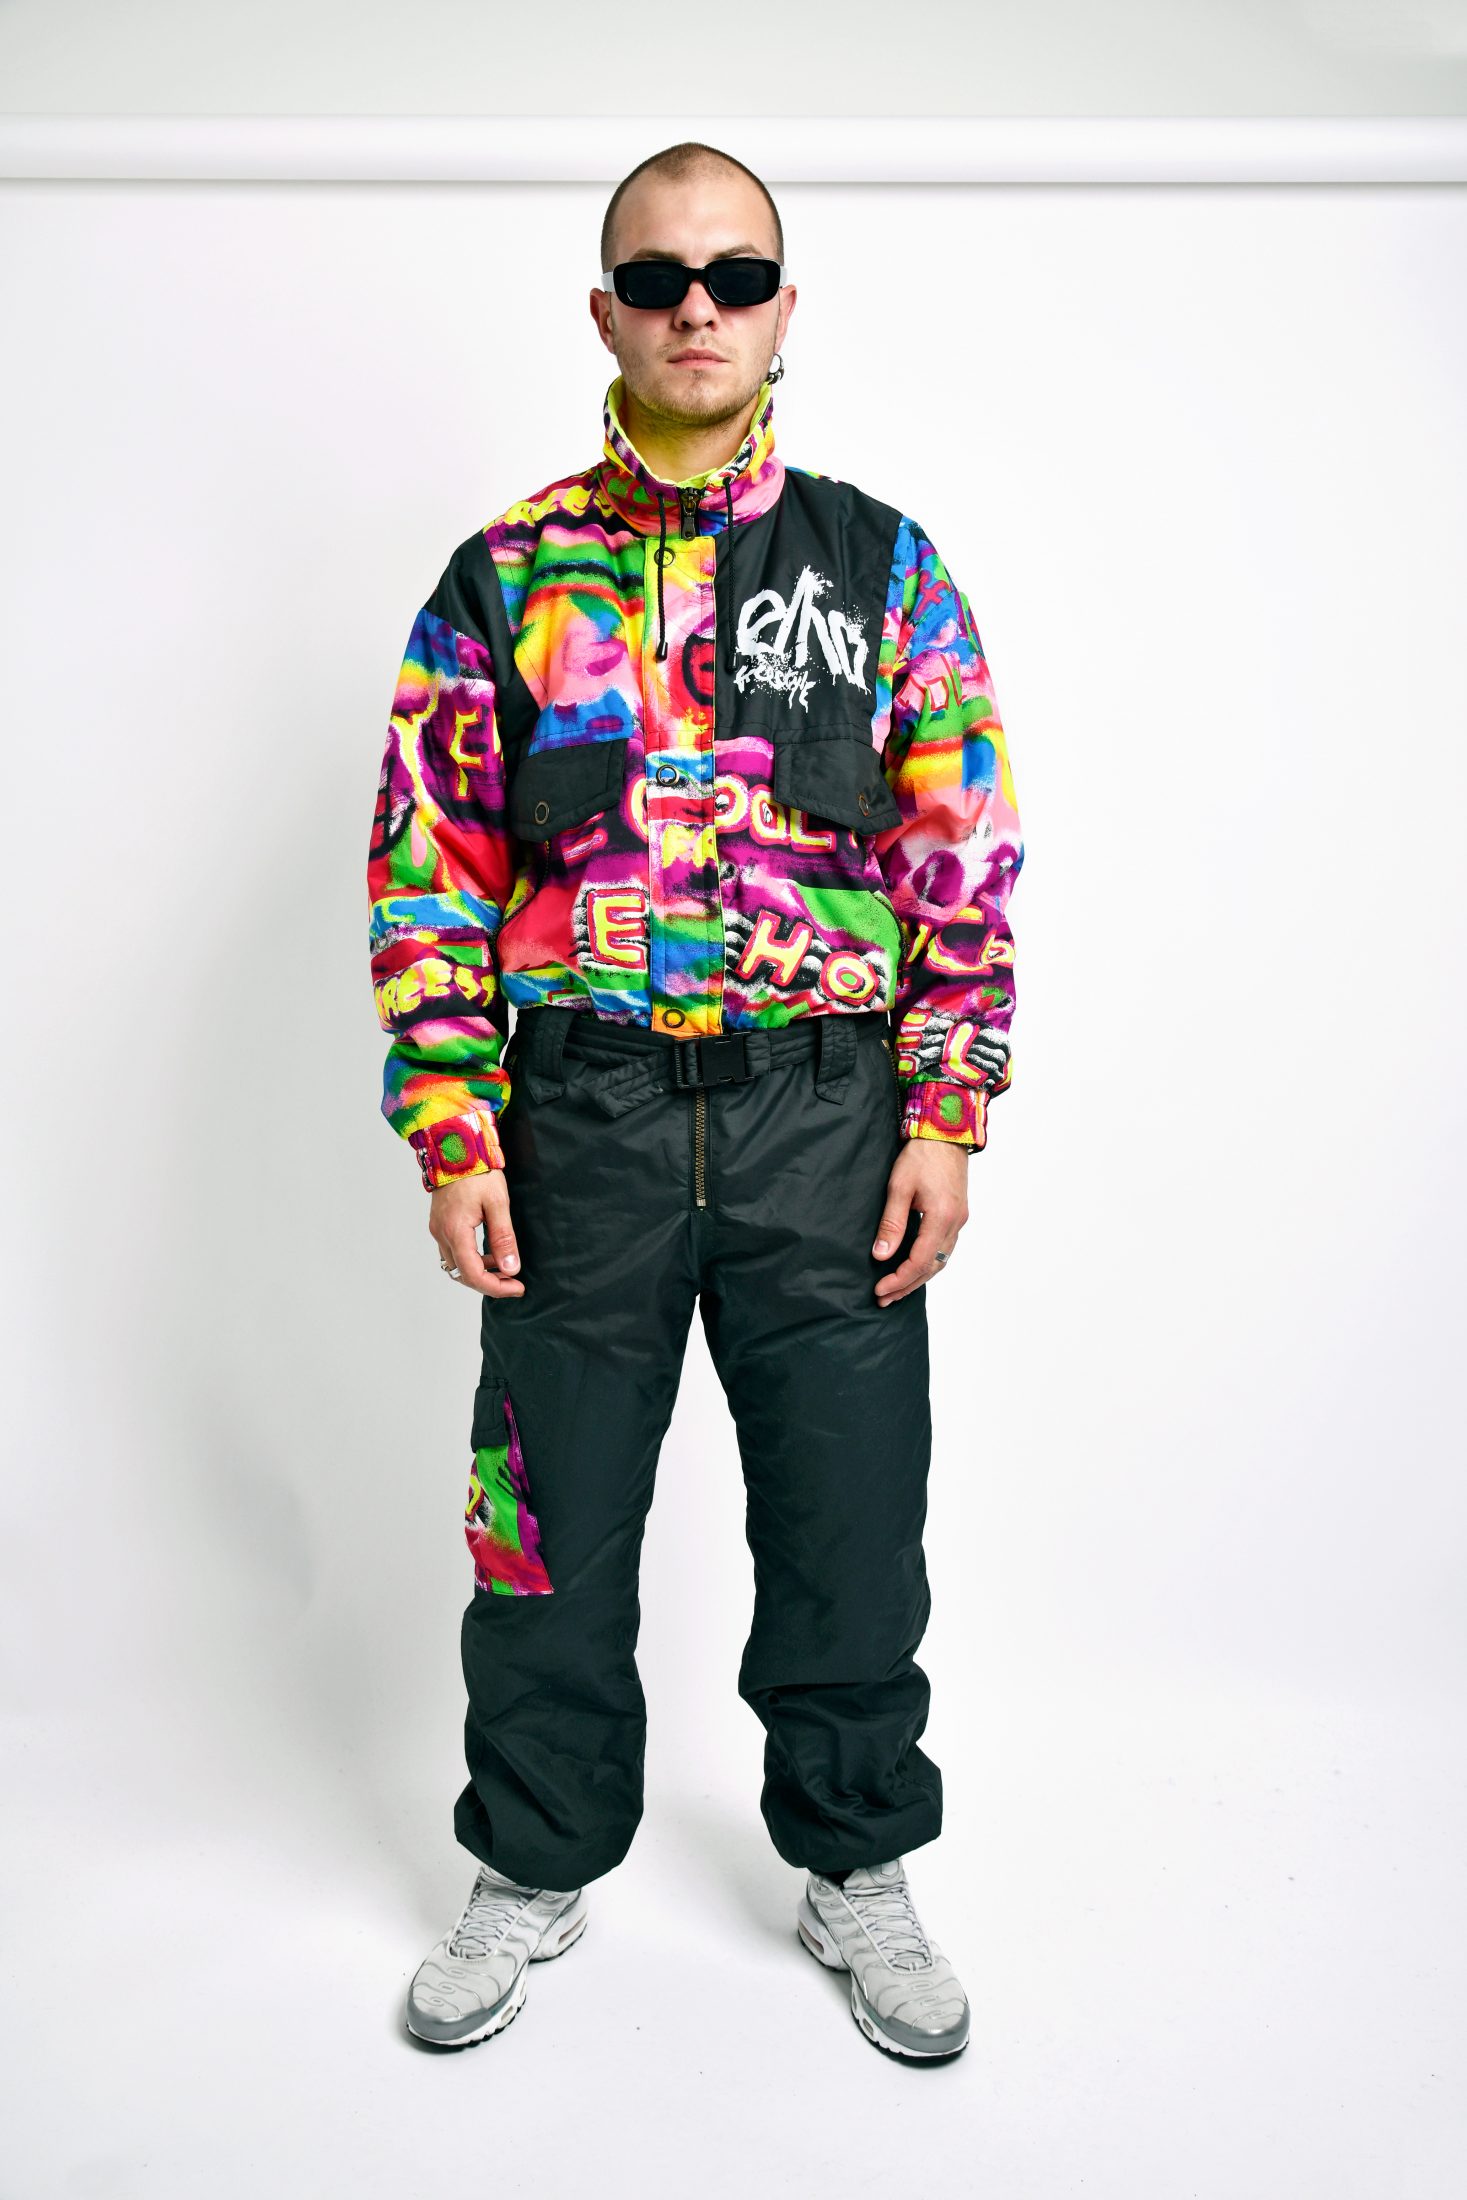 90s ski suit rainbow | Retro 90s sportswear vintage clothing